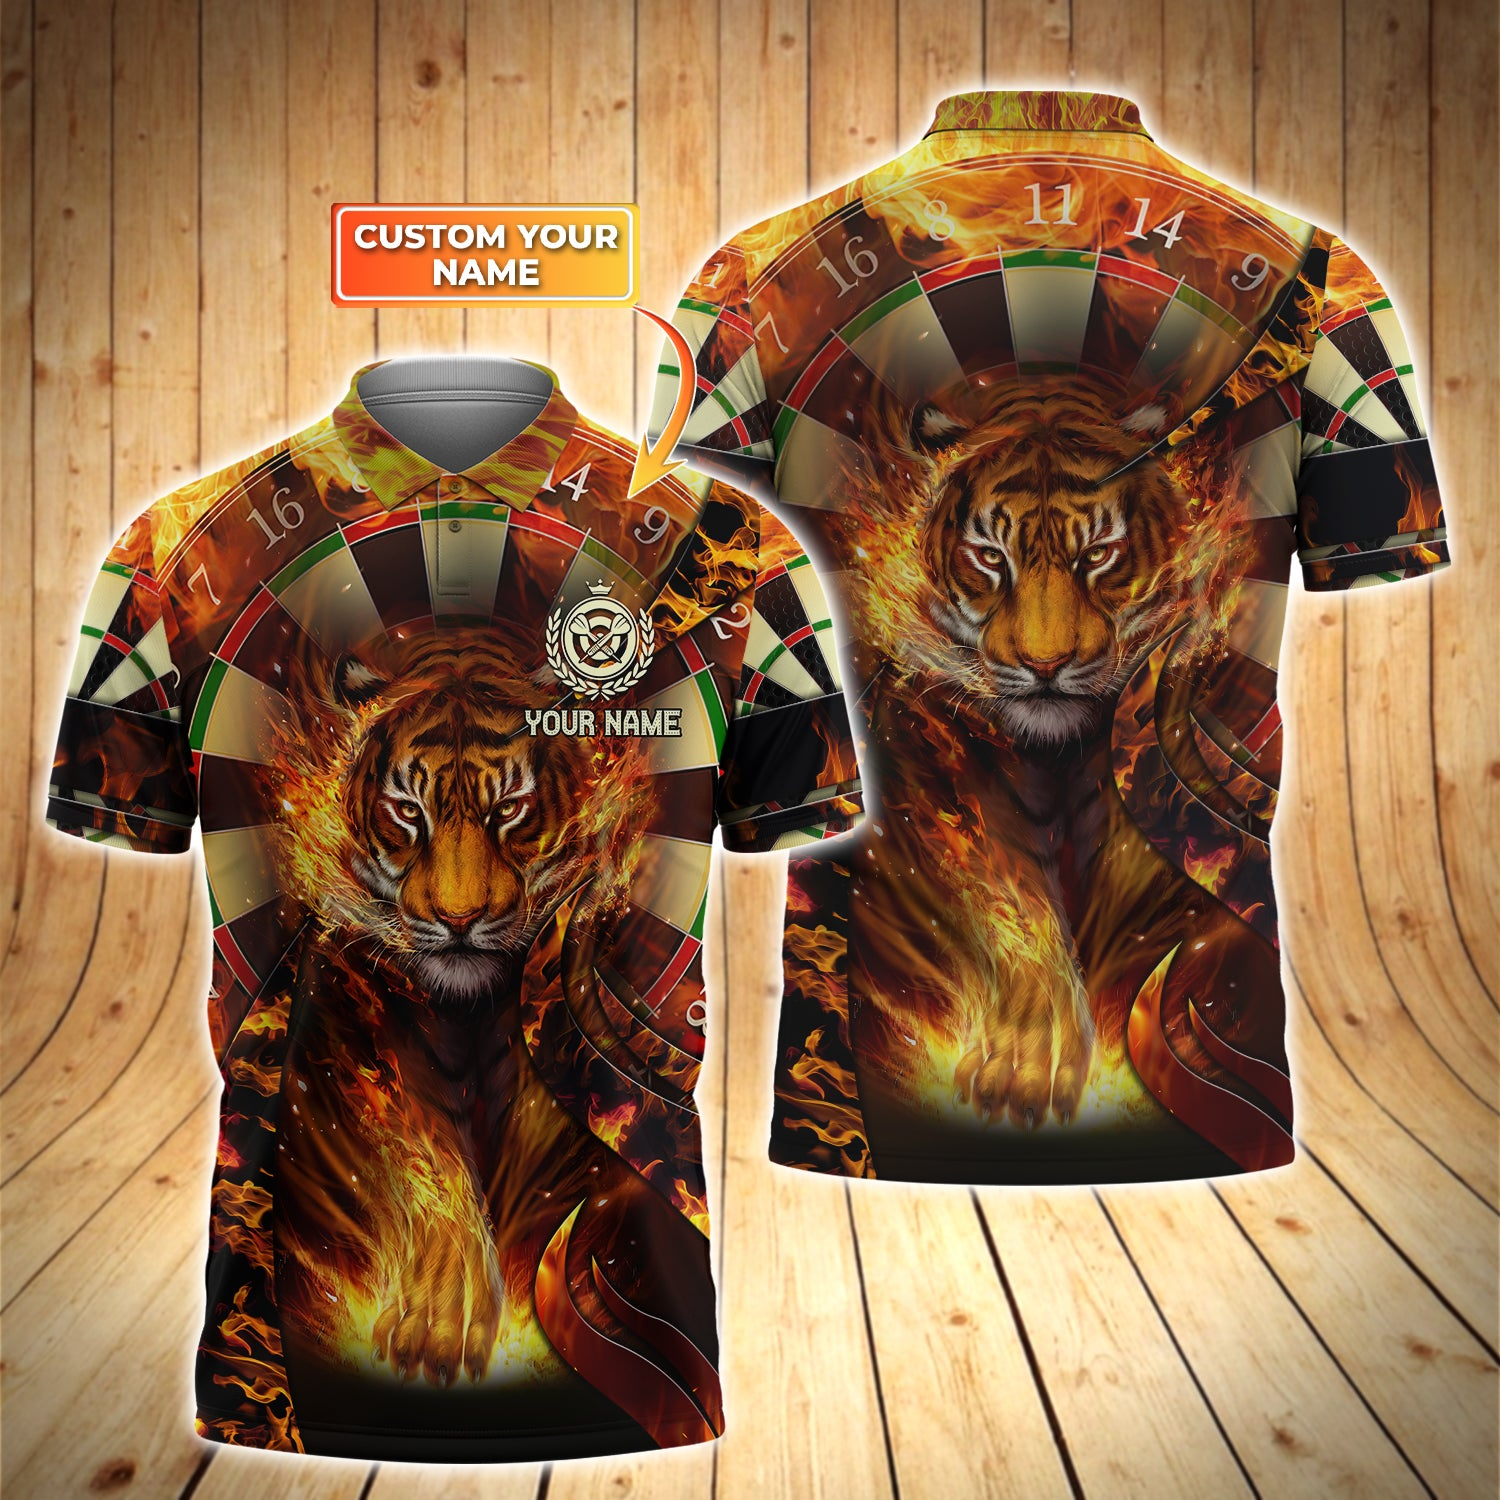 Personalized Darts Polo Shirt - Custom Name Fire Tiger Darts Polo Shirt - Tiger And Darts Polo Shirt For Dart Team, Darts Lover